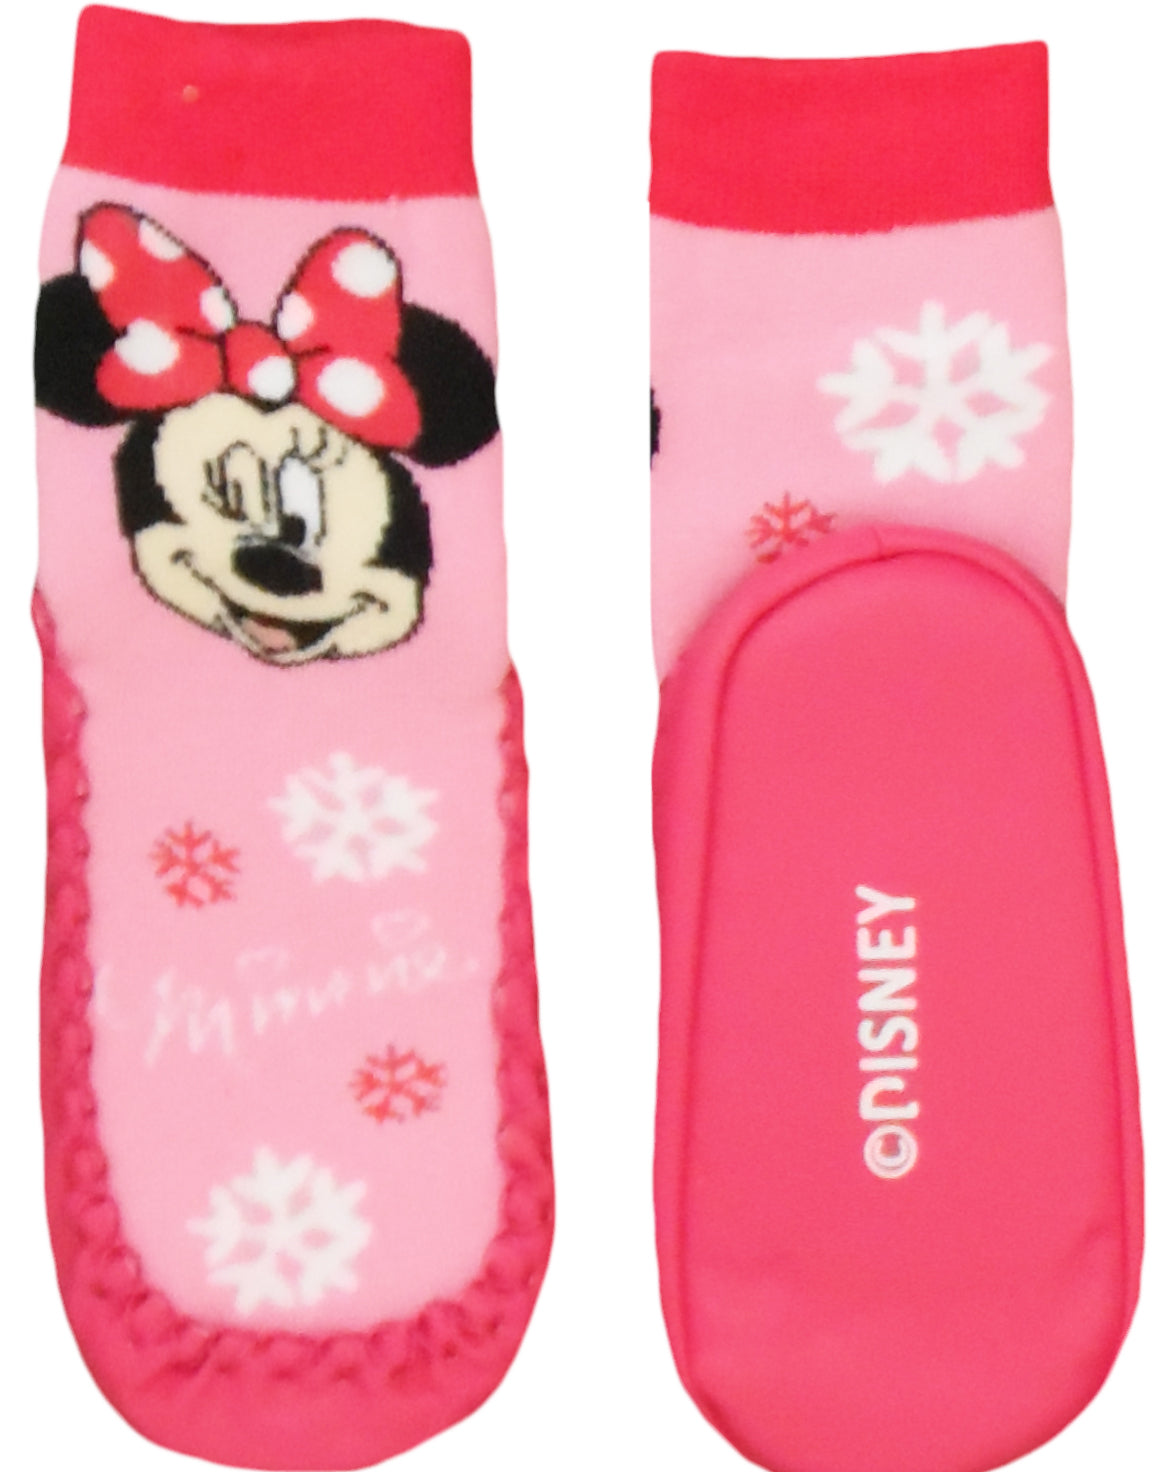 Minnie Mouse Girls Winter Socks